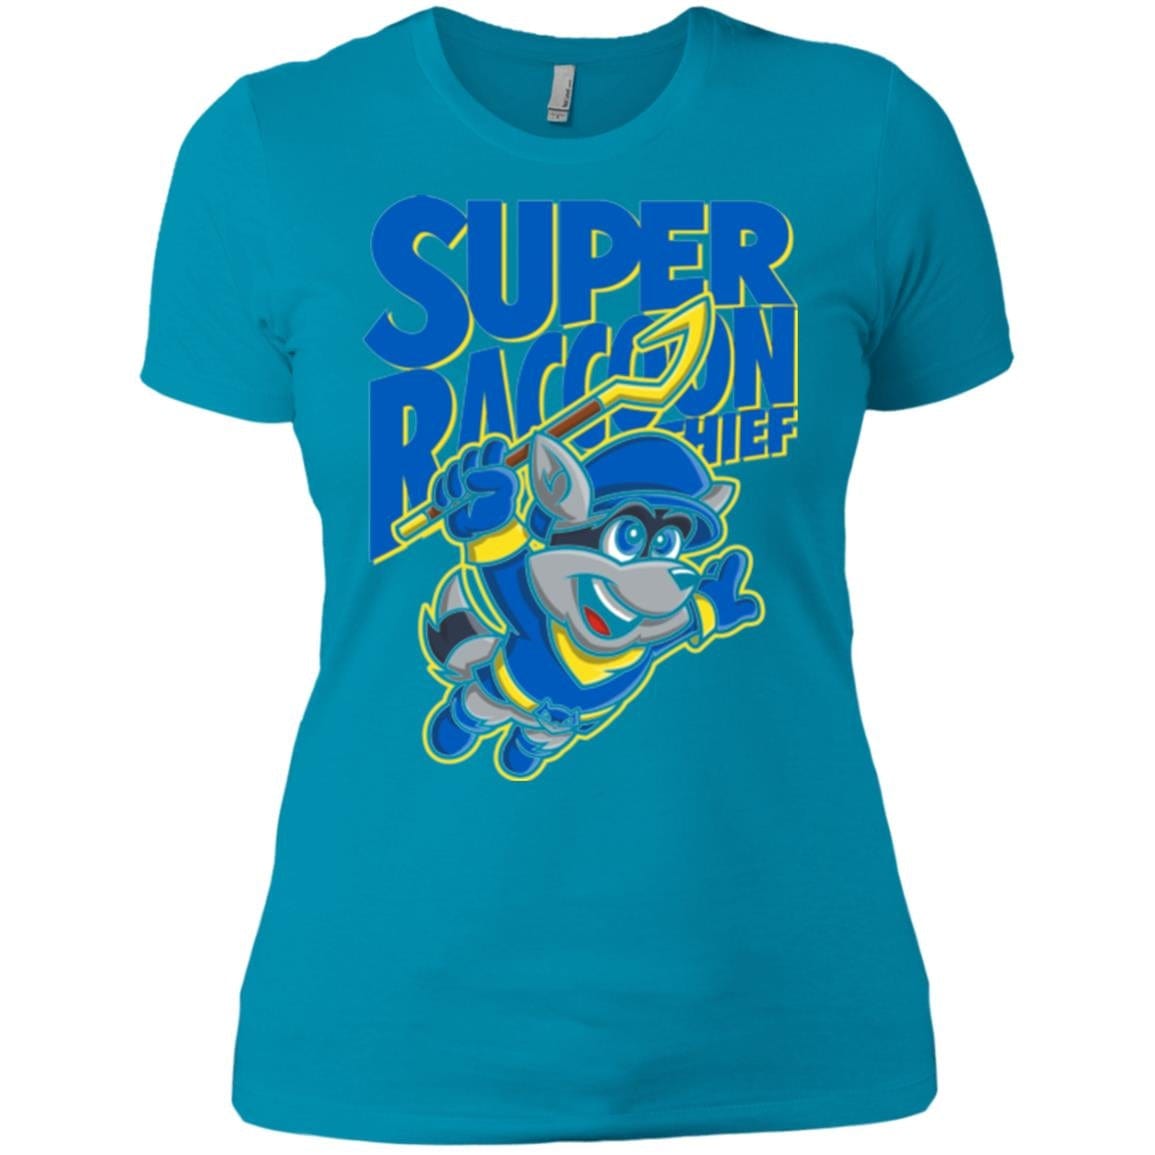 T-Shirts Turquoise / X-Small Super Racoon Thief Women's Premium T-Shirt